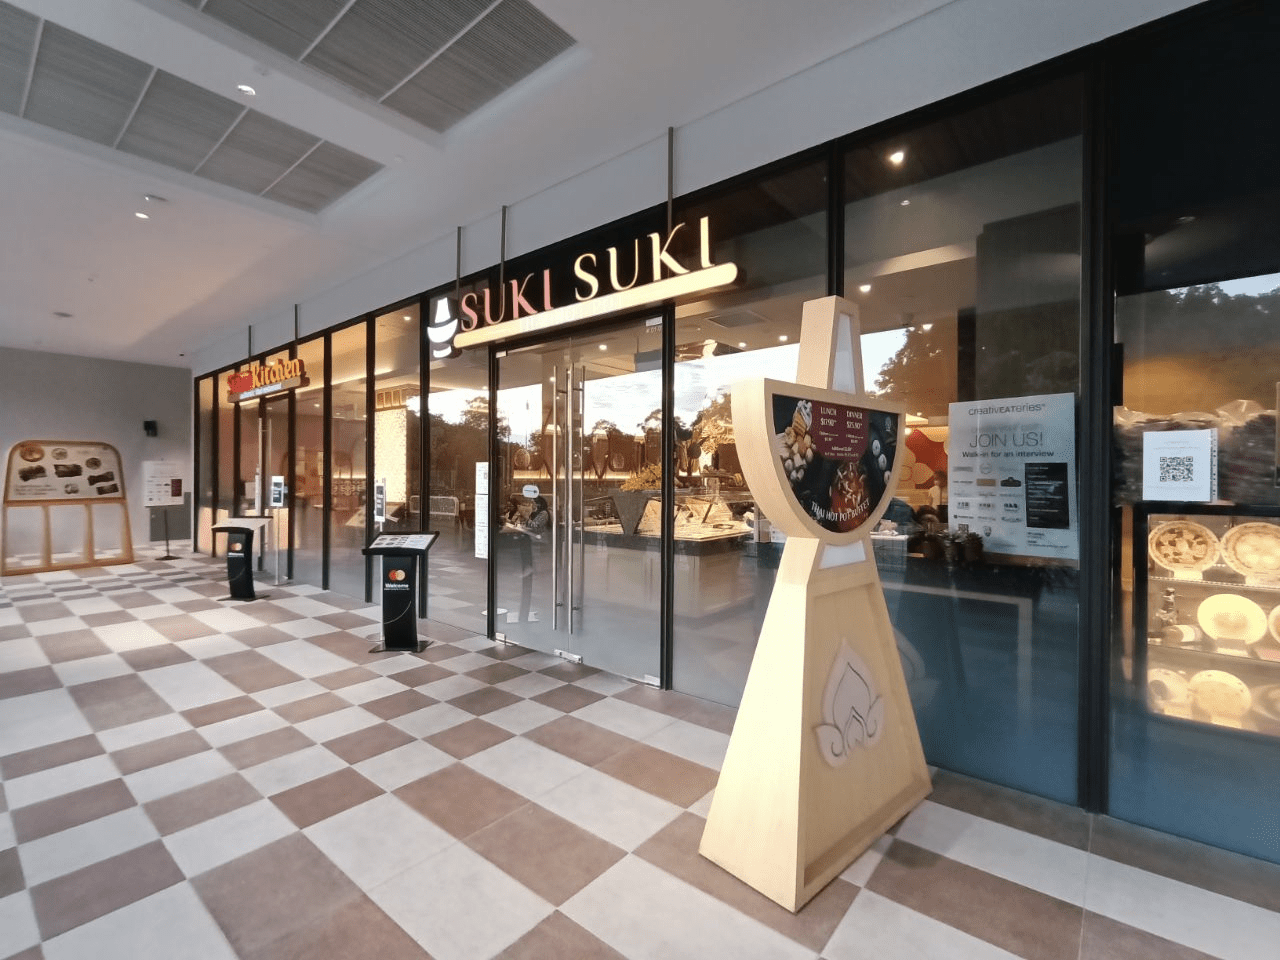 New cafes and restaurants in November - Suki-Suki